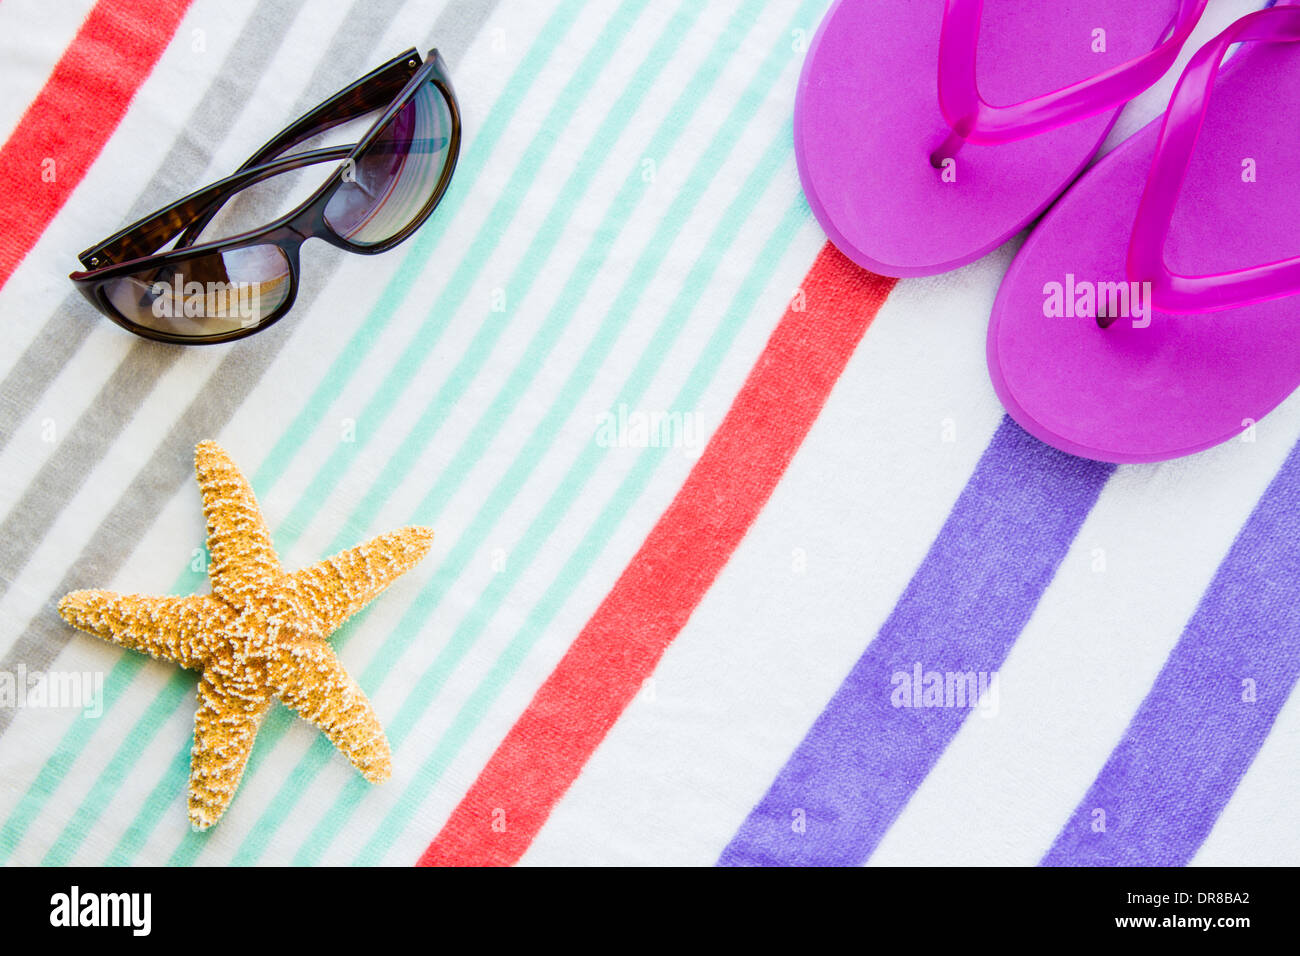 Beach scene with purple flip flops, sunglasses and a starfish on a striped beach towel. Stock Photo